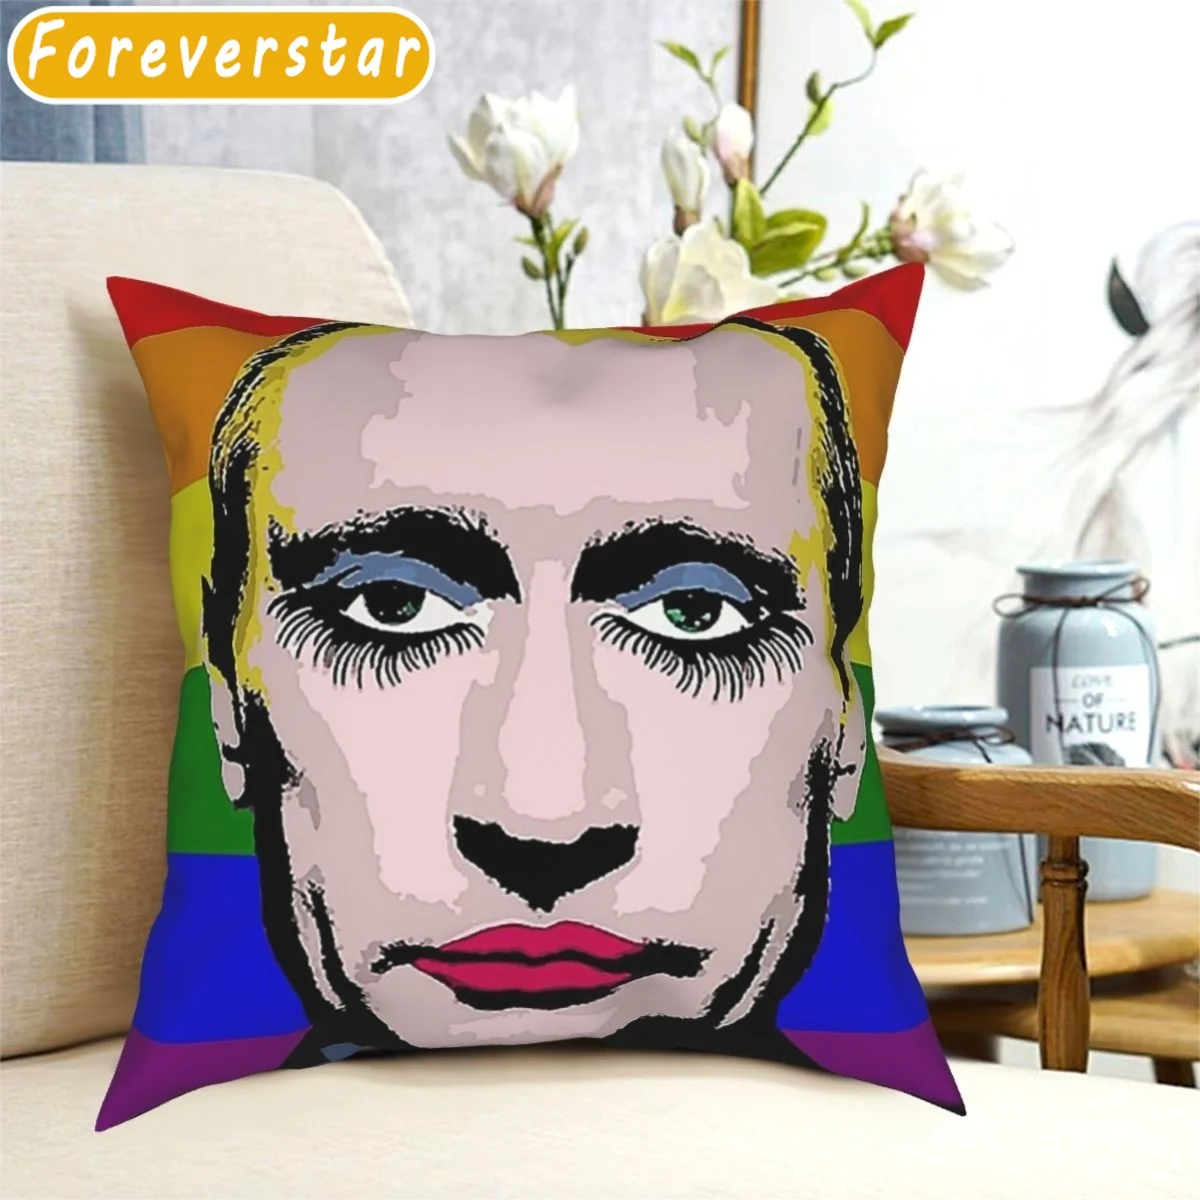 

Vladimir Putin Cushion Cover Travel Pillow Case Decorative Polyester Home Sofa Throw Pillows Case 45x45cm Funda Cojin Cojines